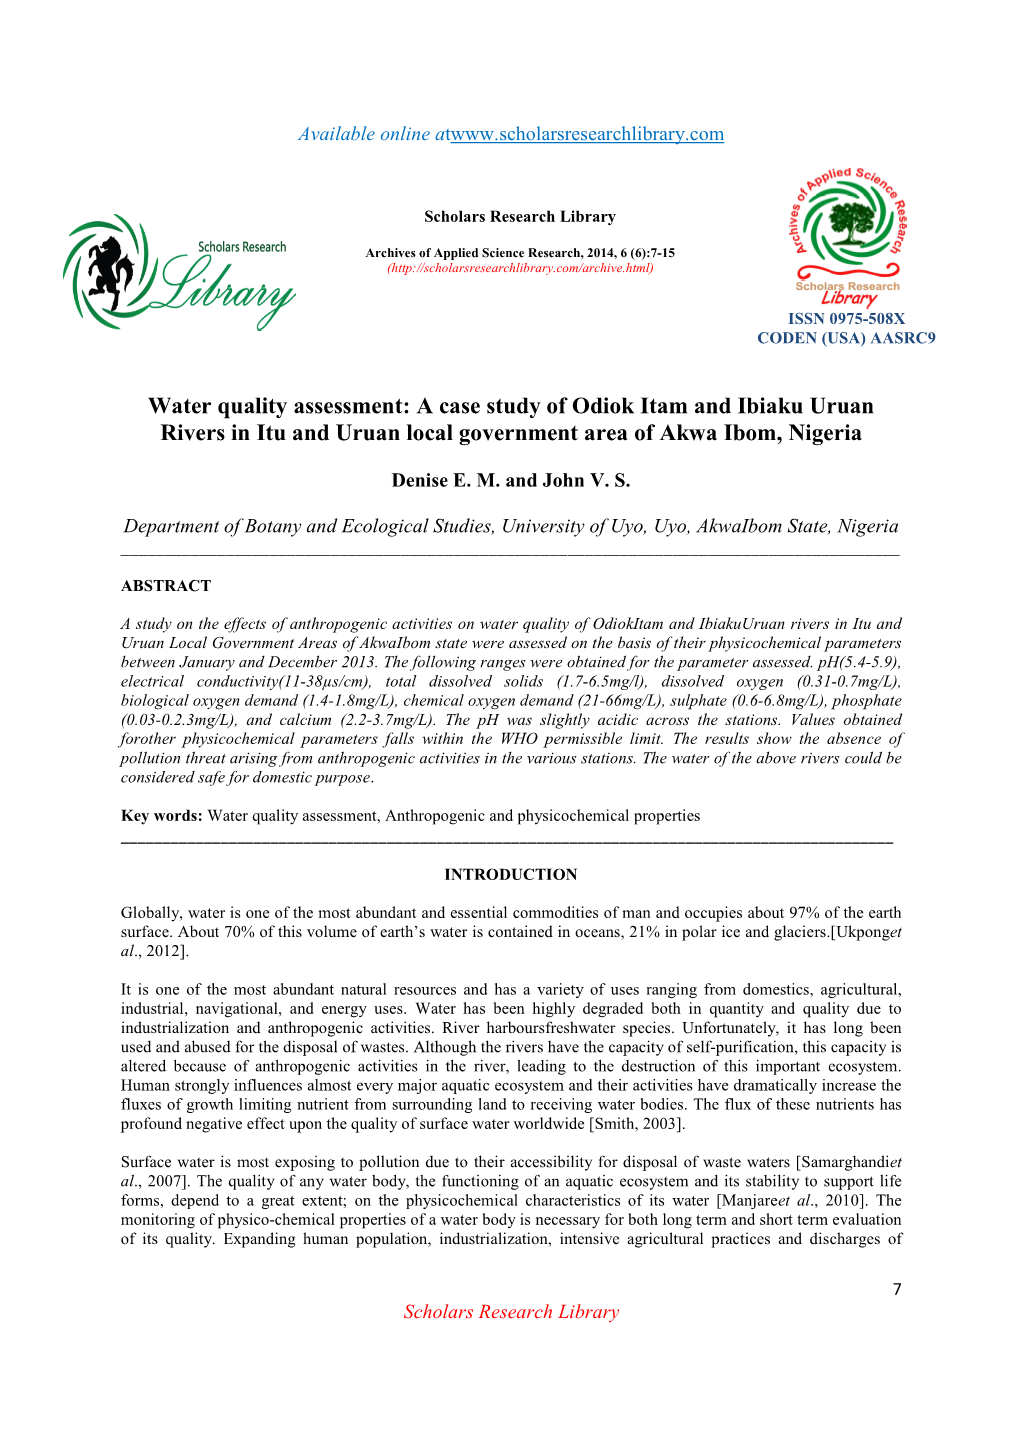 A Case Study of Odiok Itam and Ibiaku Uruan Rivers in Itu and Uruan Local Government Area of Akwa Ibom, Nigeria